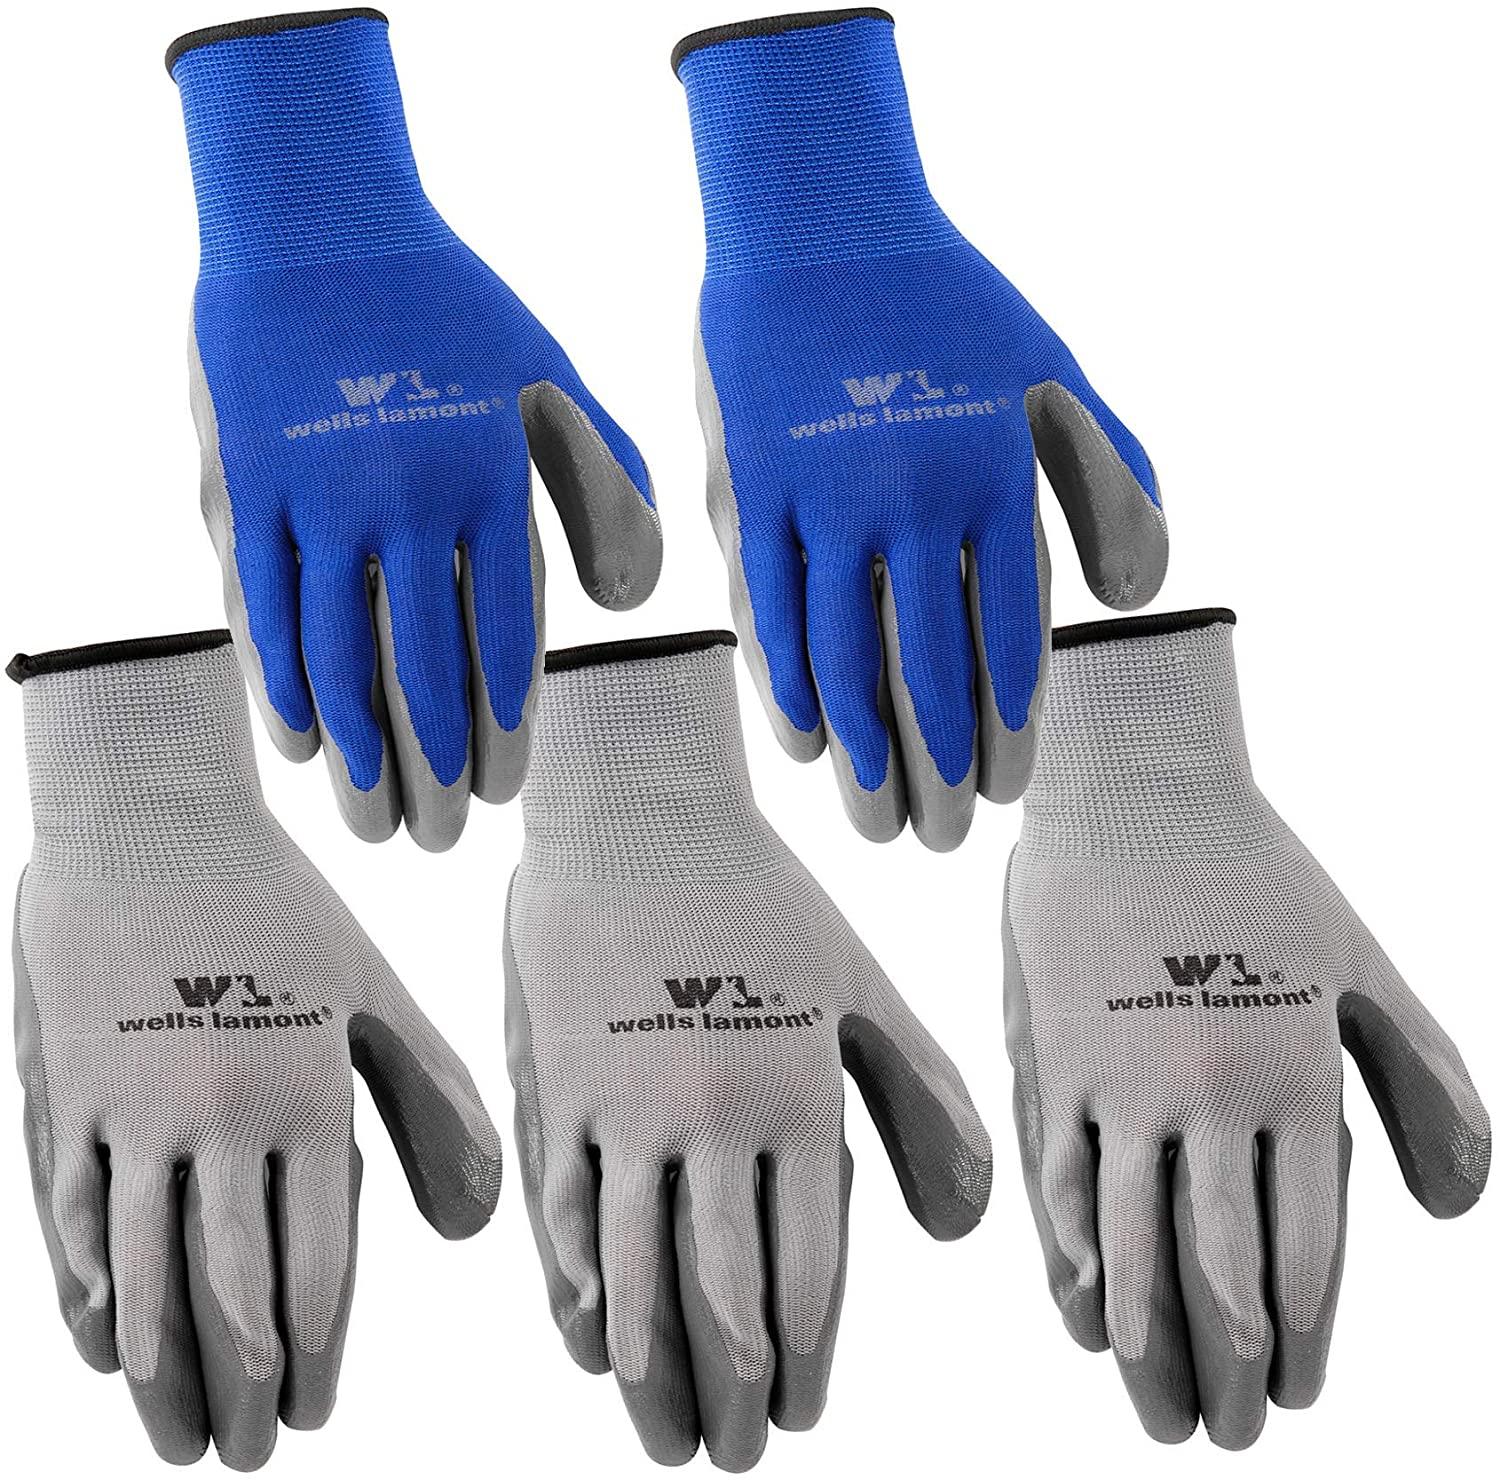 5 Wells Lamont Nitrile Work Gloves for $4.96